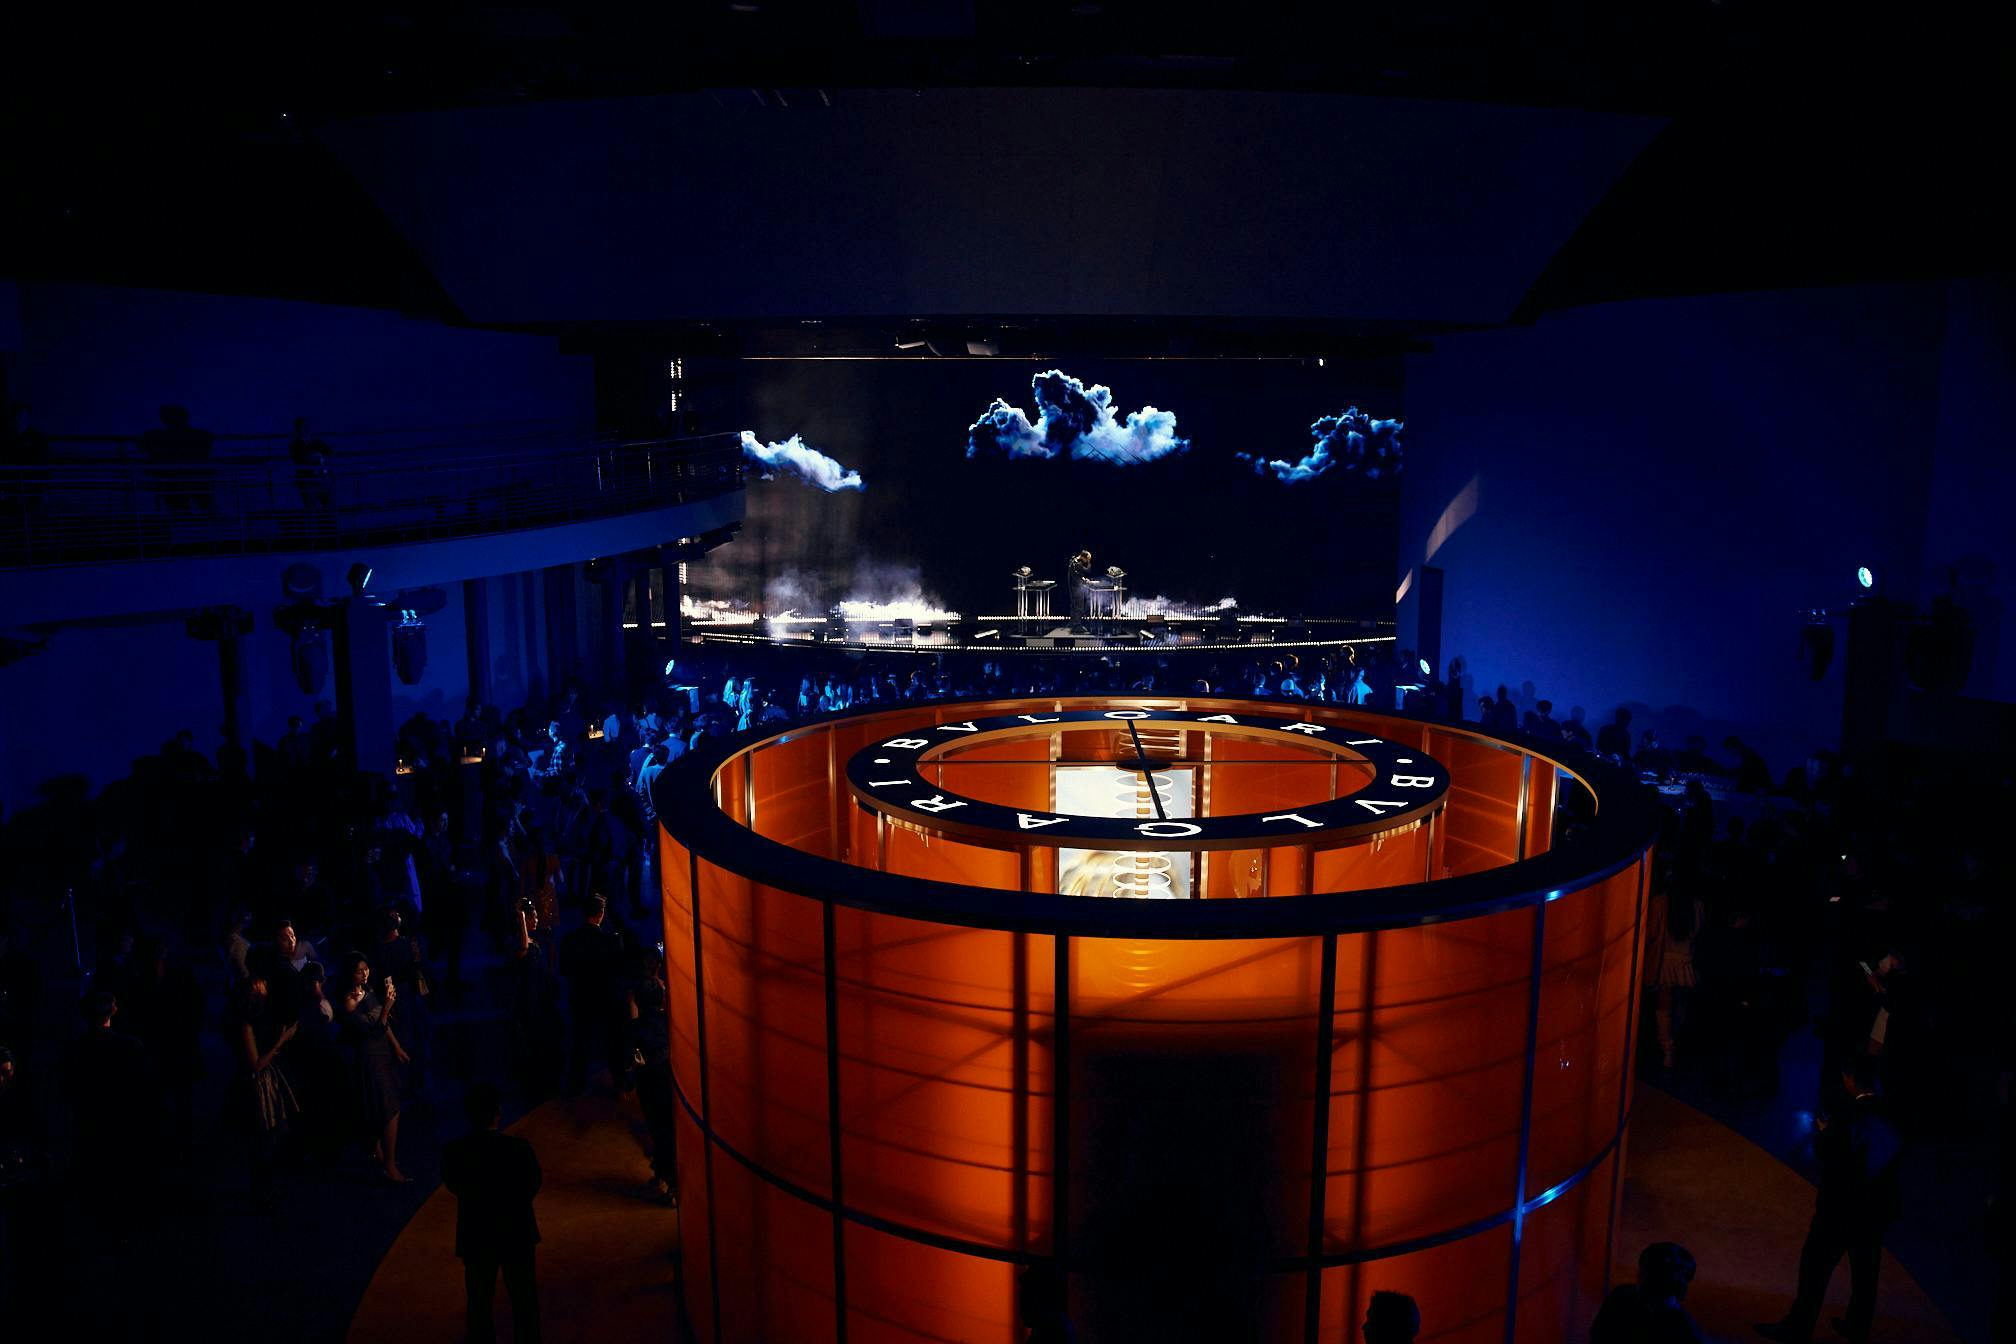 lighting stage urban concert crowd person indoors theater planetarium city